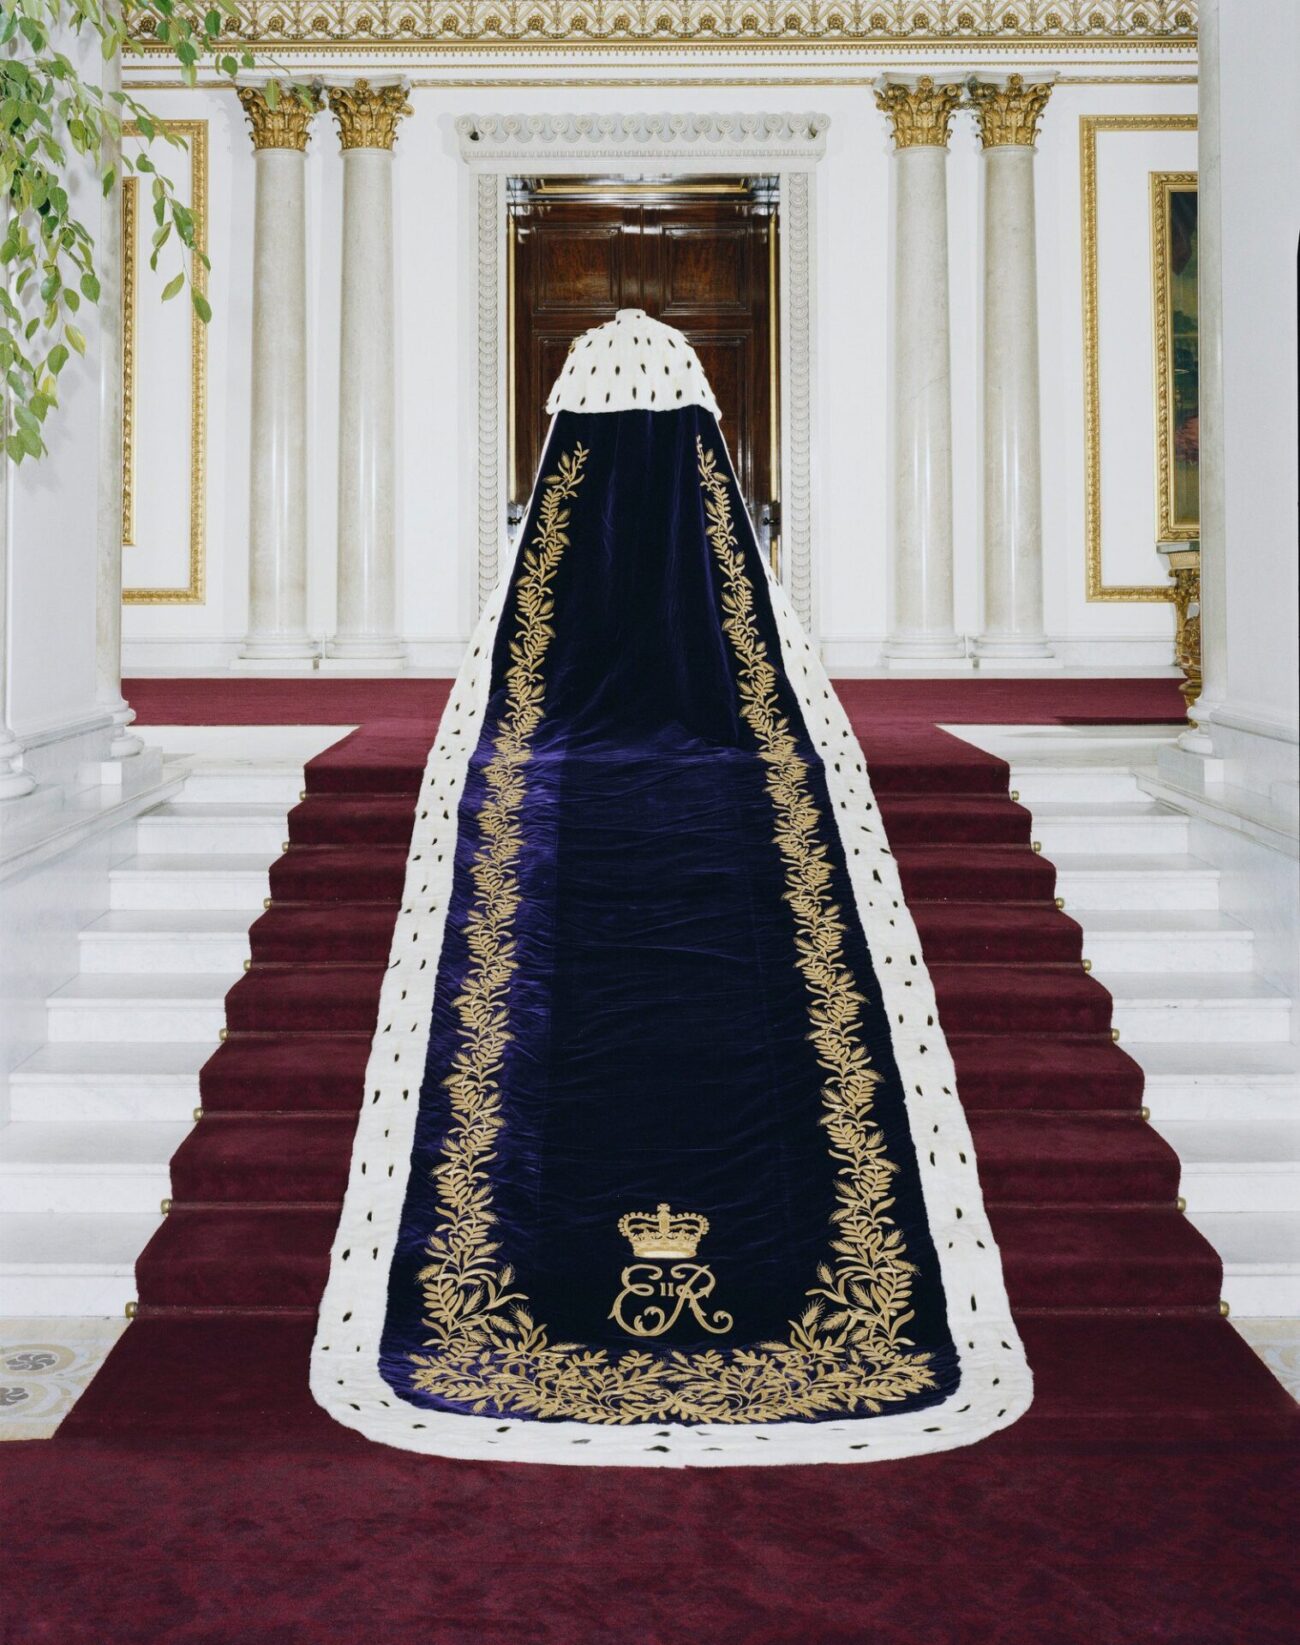 De Robe of Estate die Elizabeth droeg bij haar kroning in 1953.